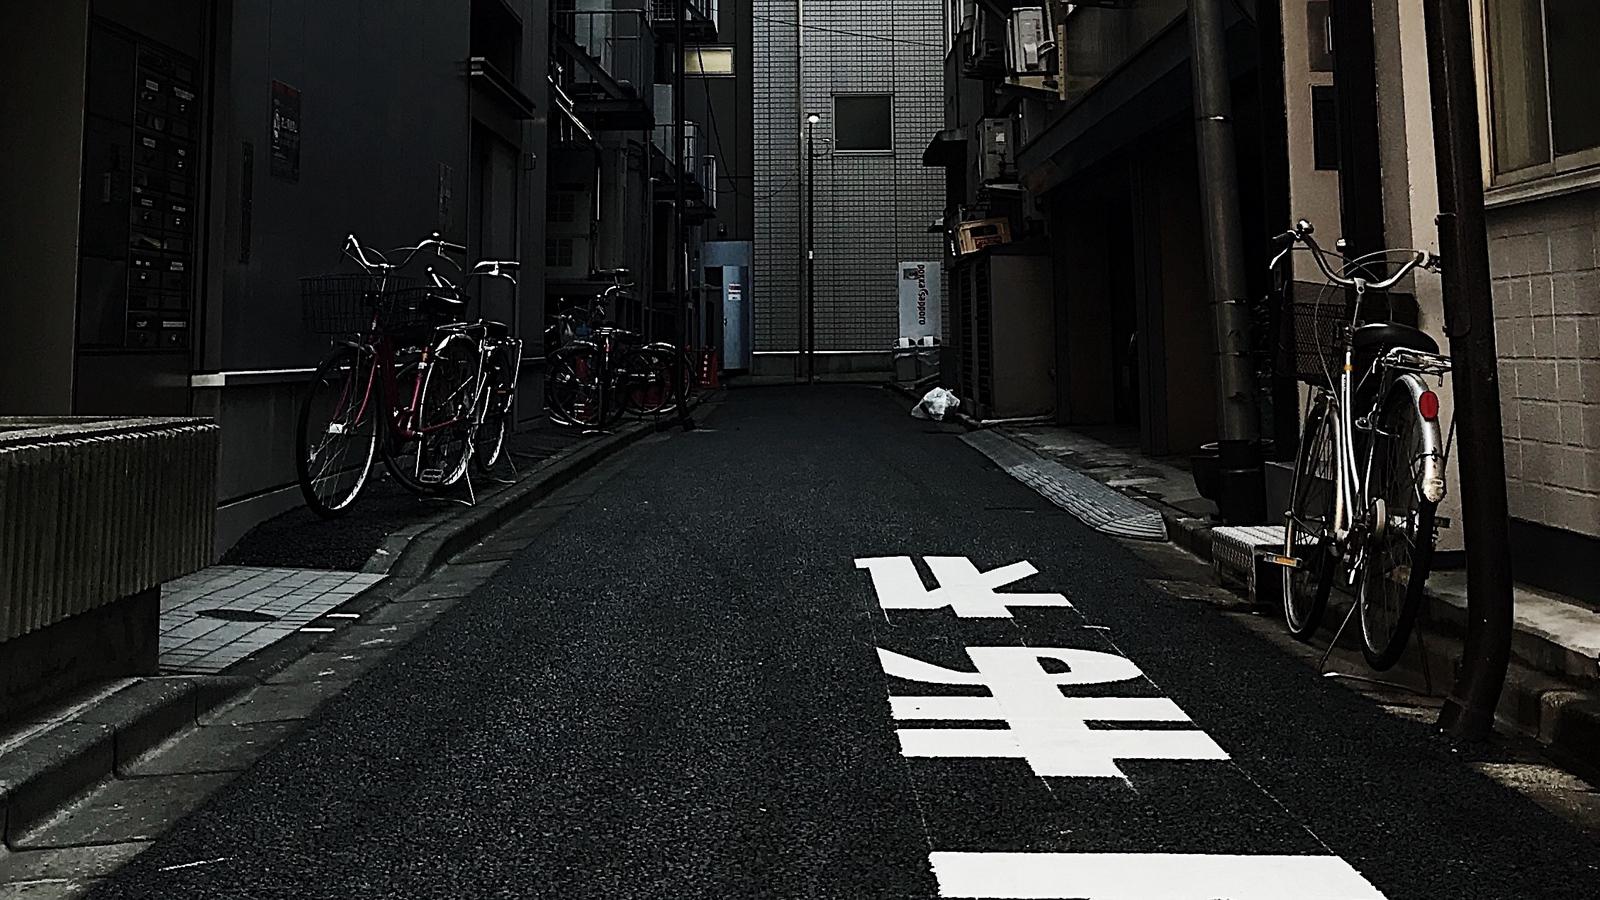 Download wallpaper 1600x900 alley, buildings, asphalt, bicycles